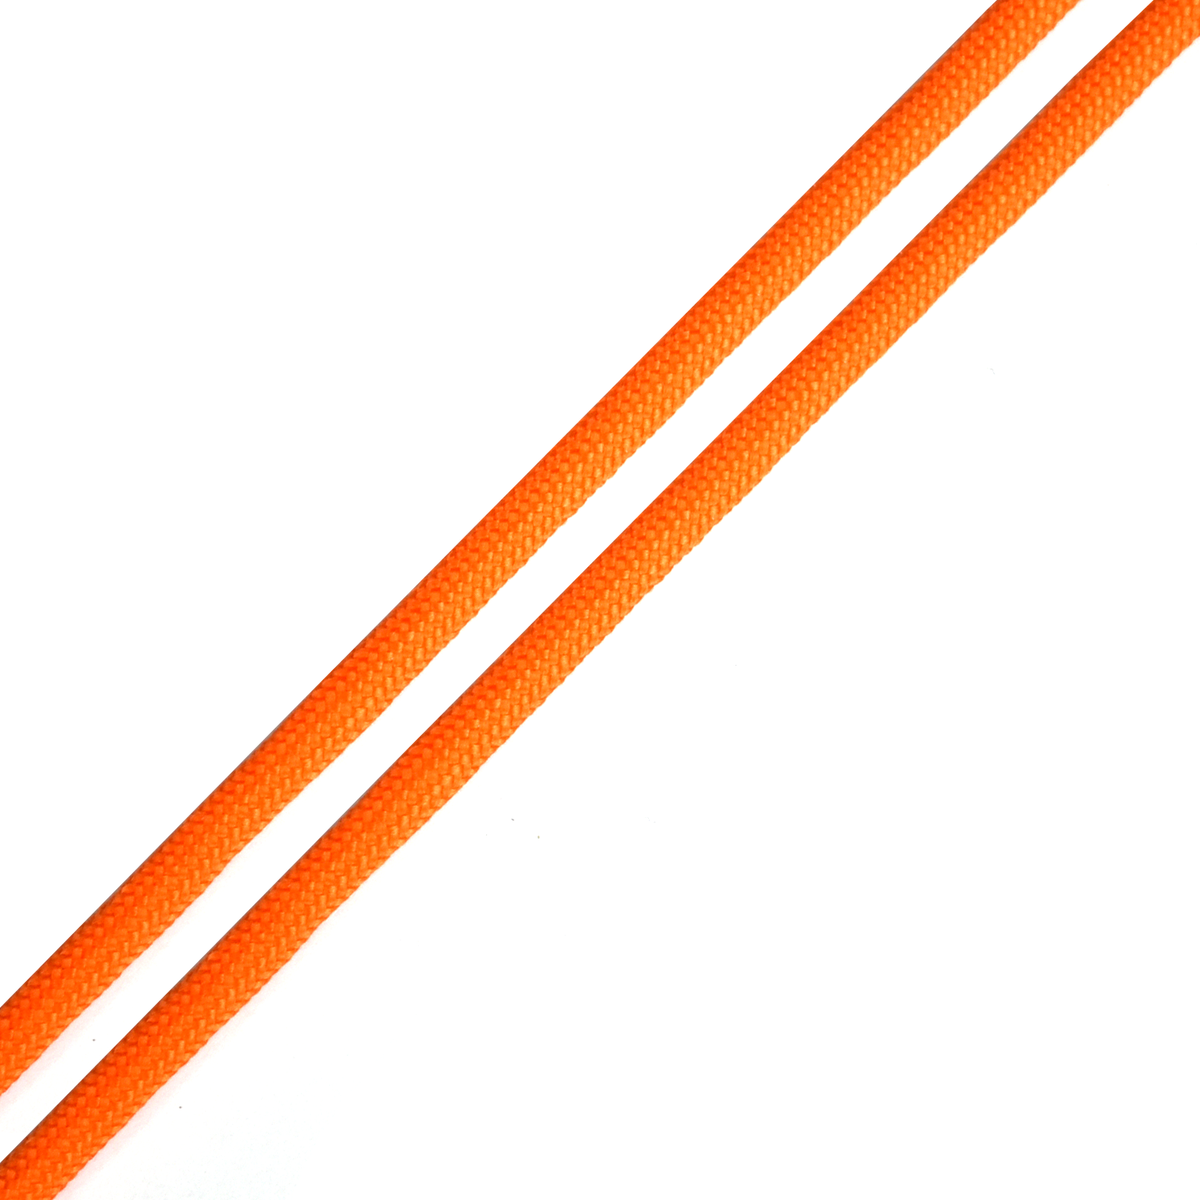 9 Cores Parachute Cord (Orange) - Thomas Tools Malaysia